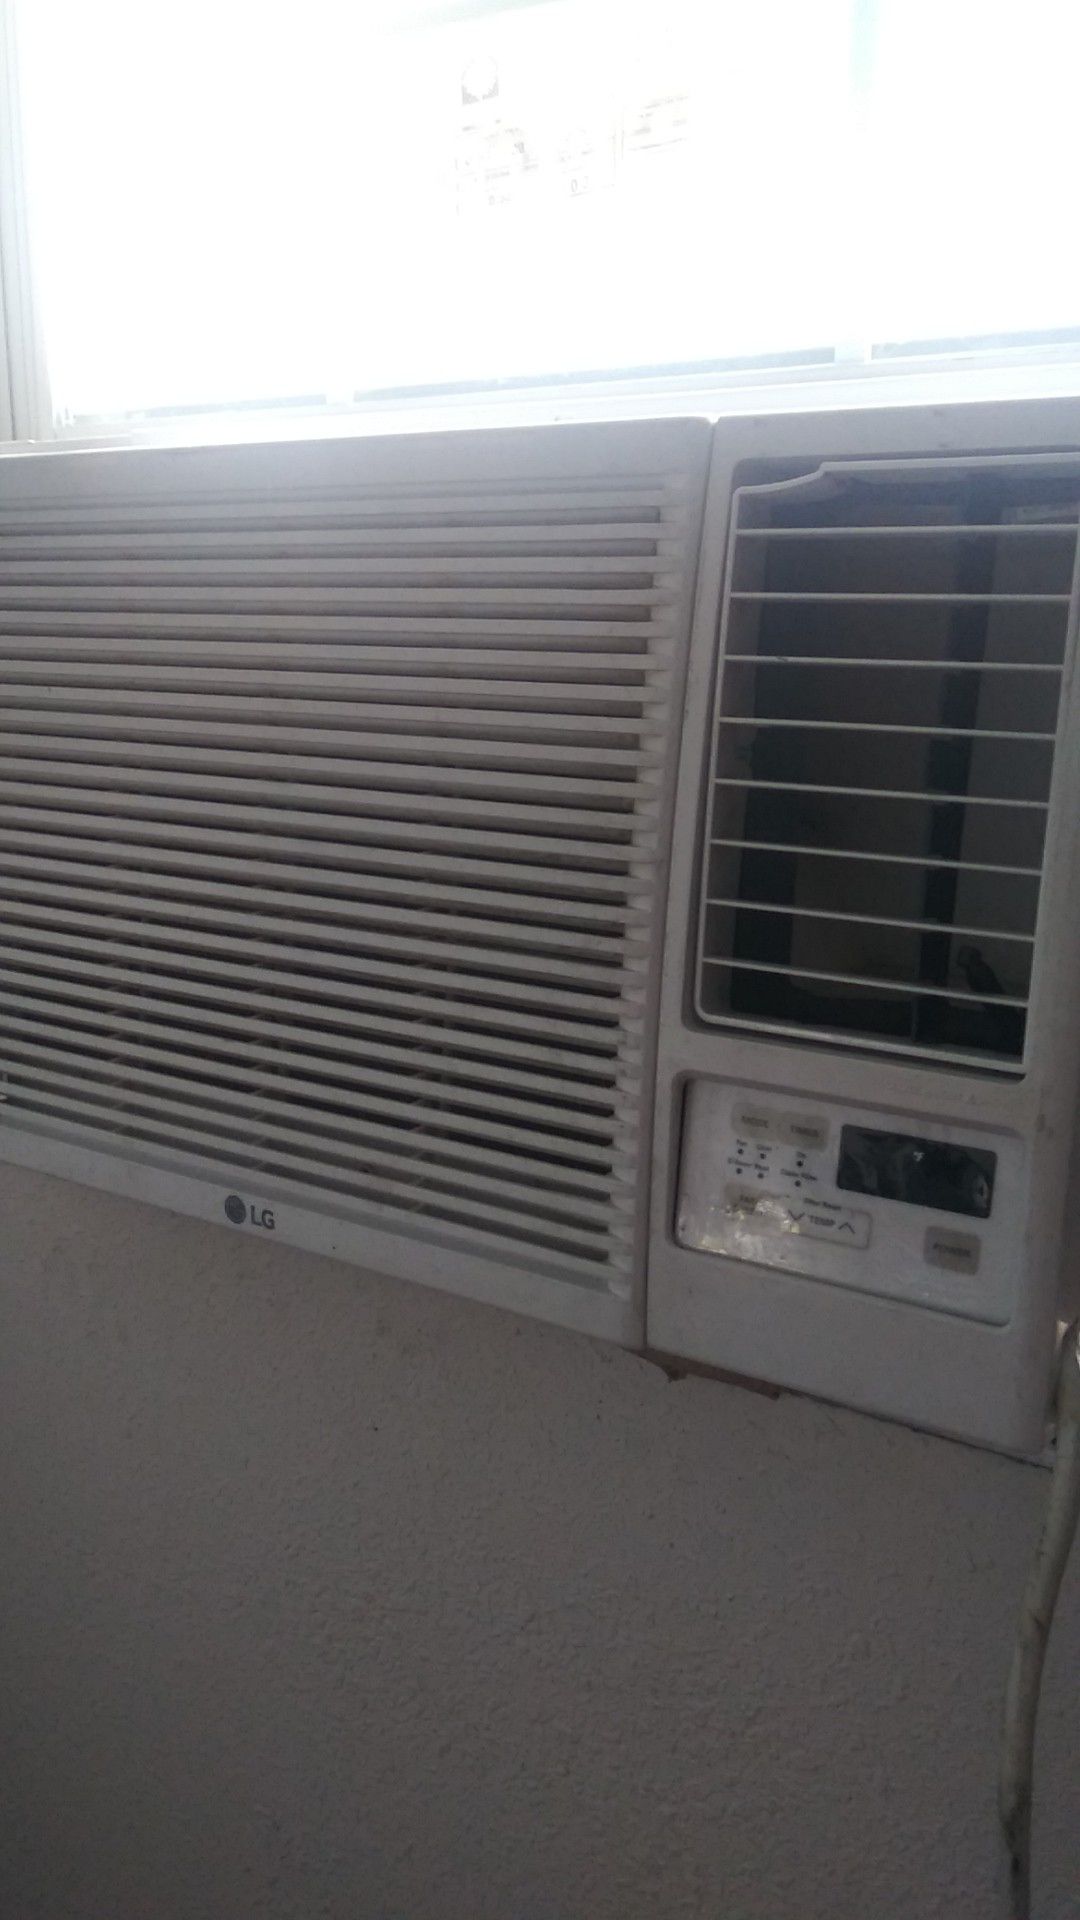 Lg 12000 btu air conditioner/heater combo